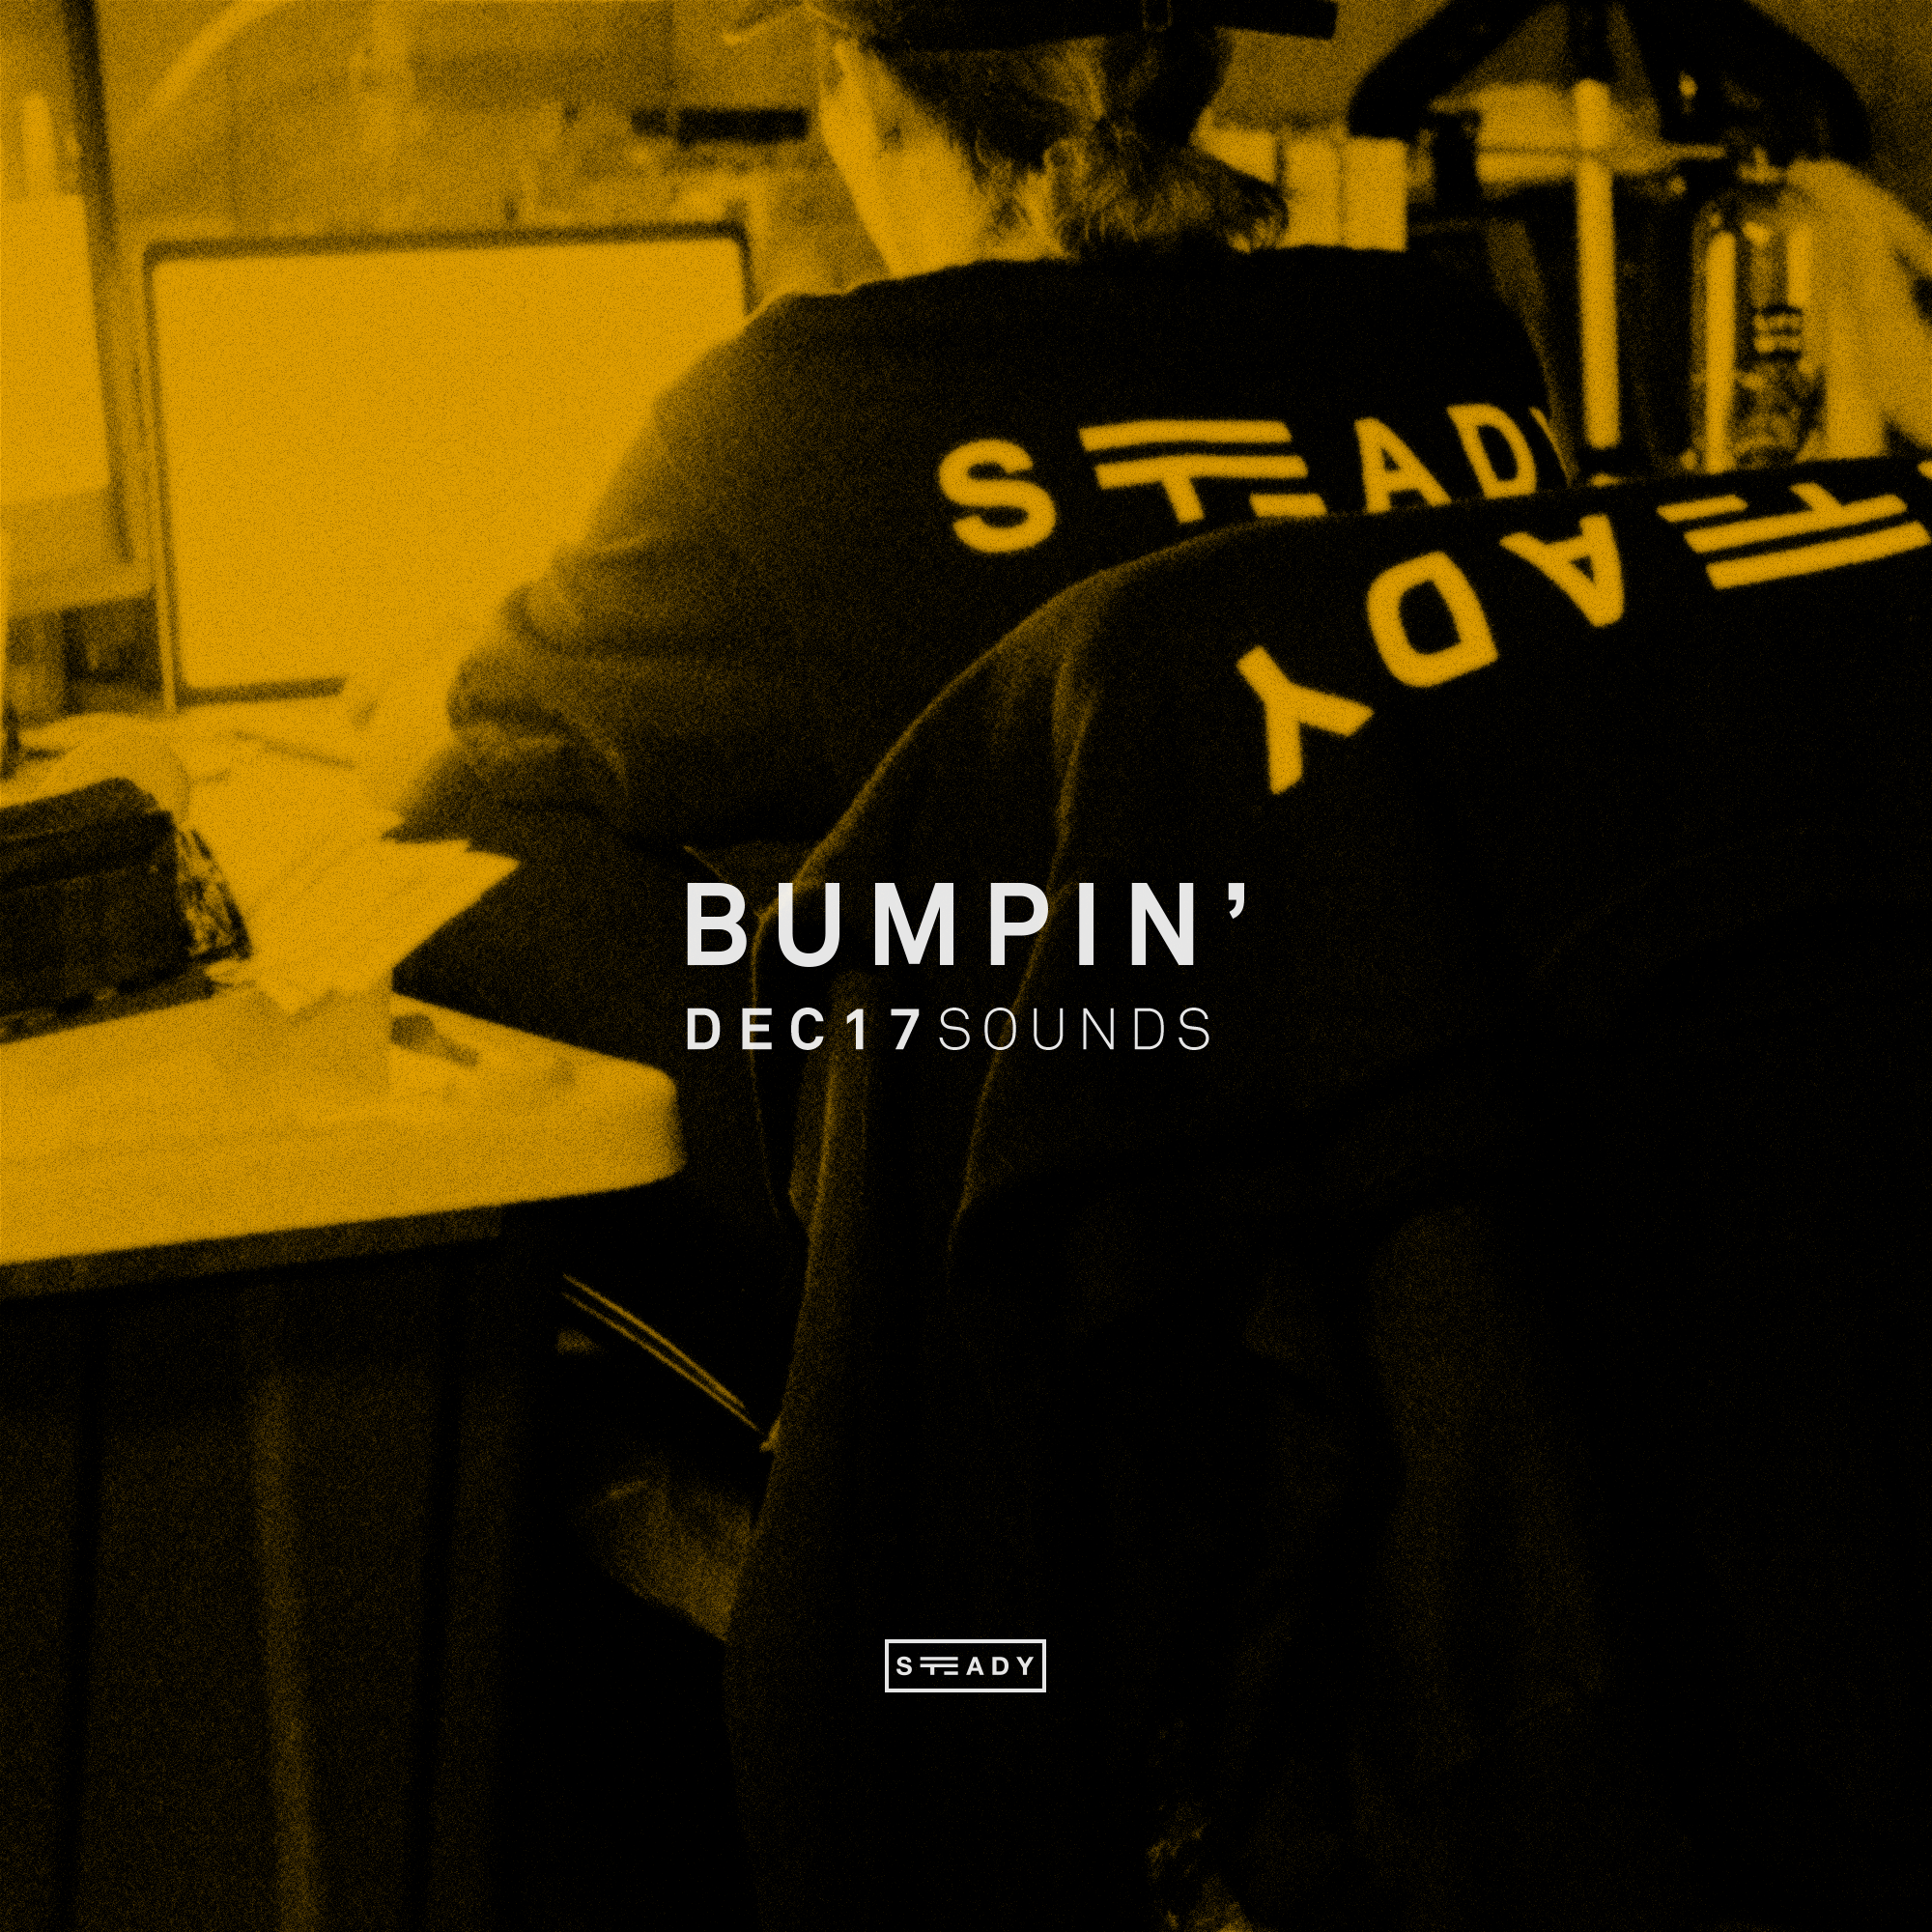 STEADY BUMPIN’: DEC17 SOUNDS